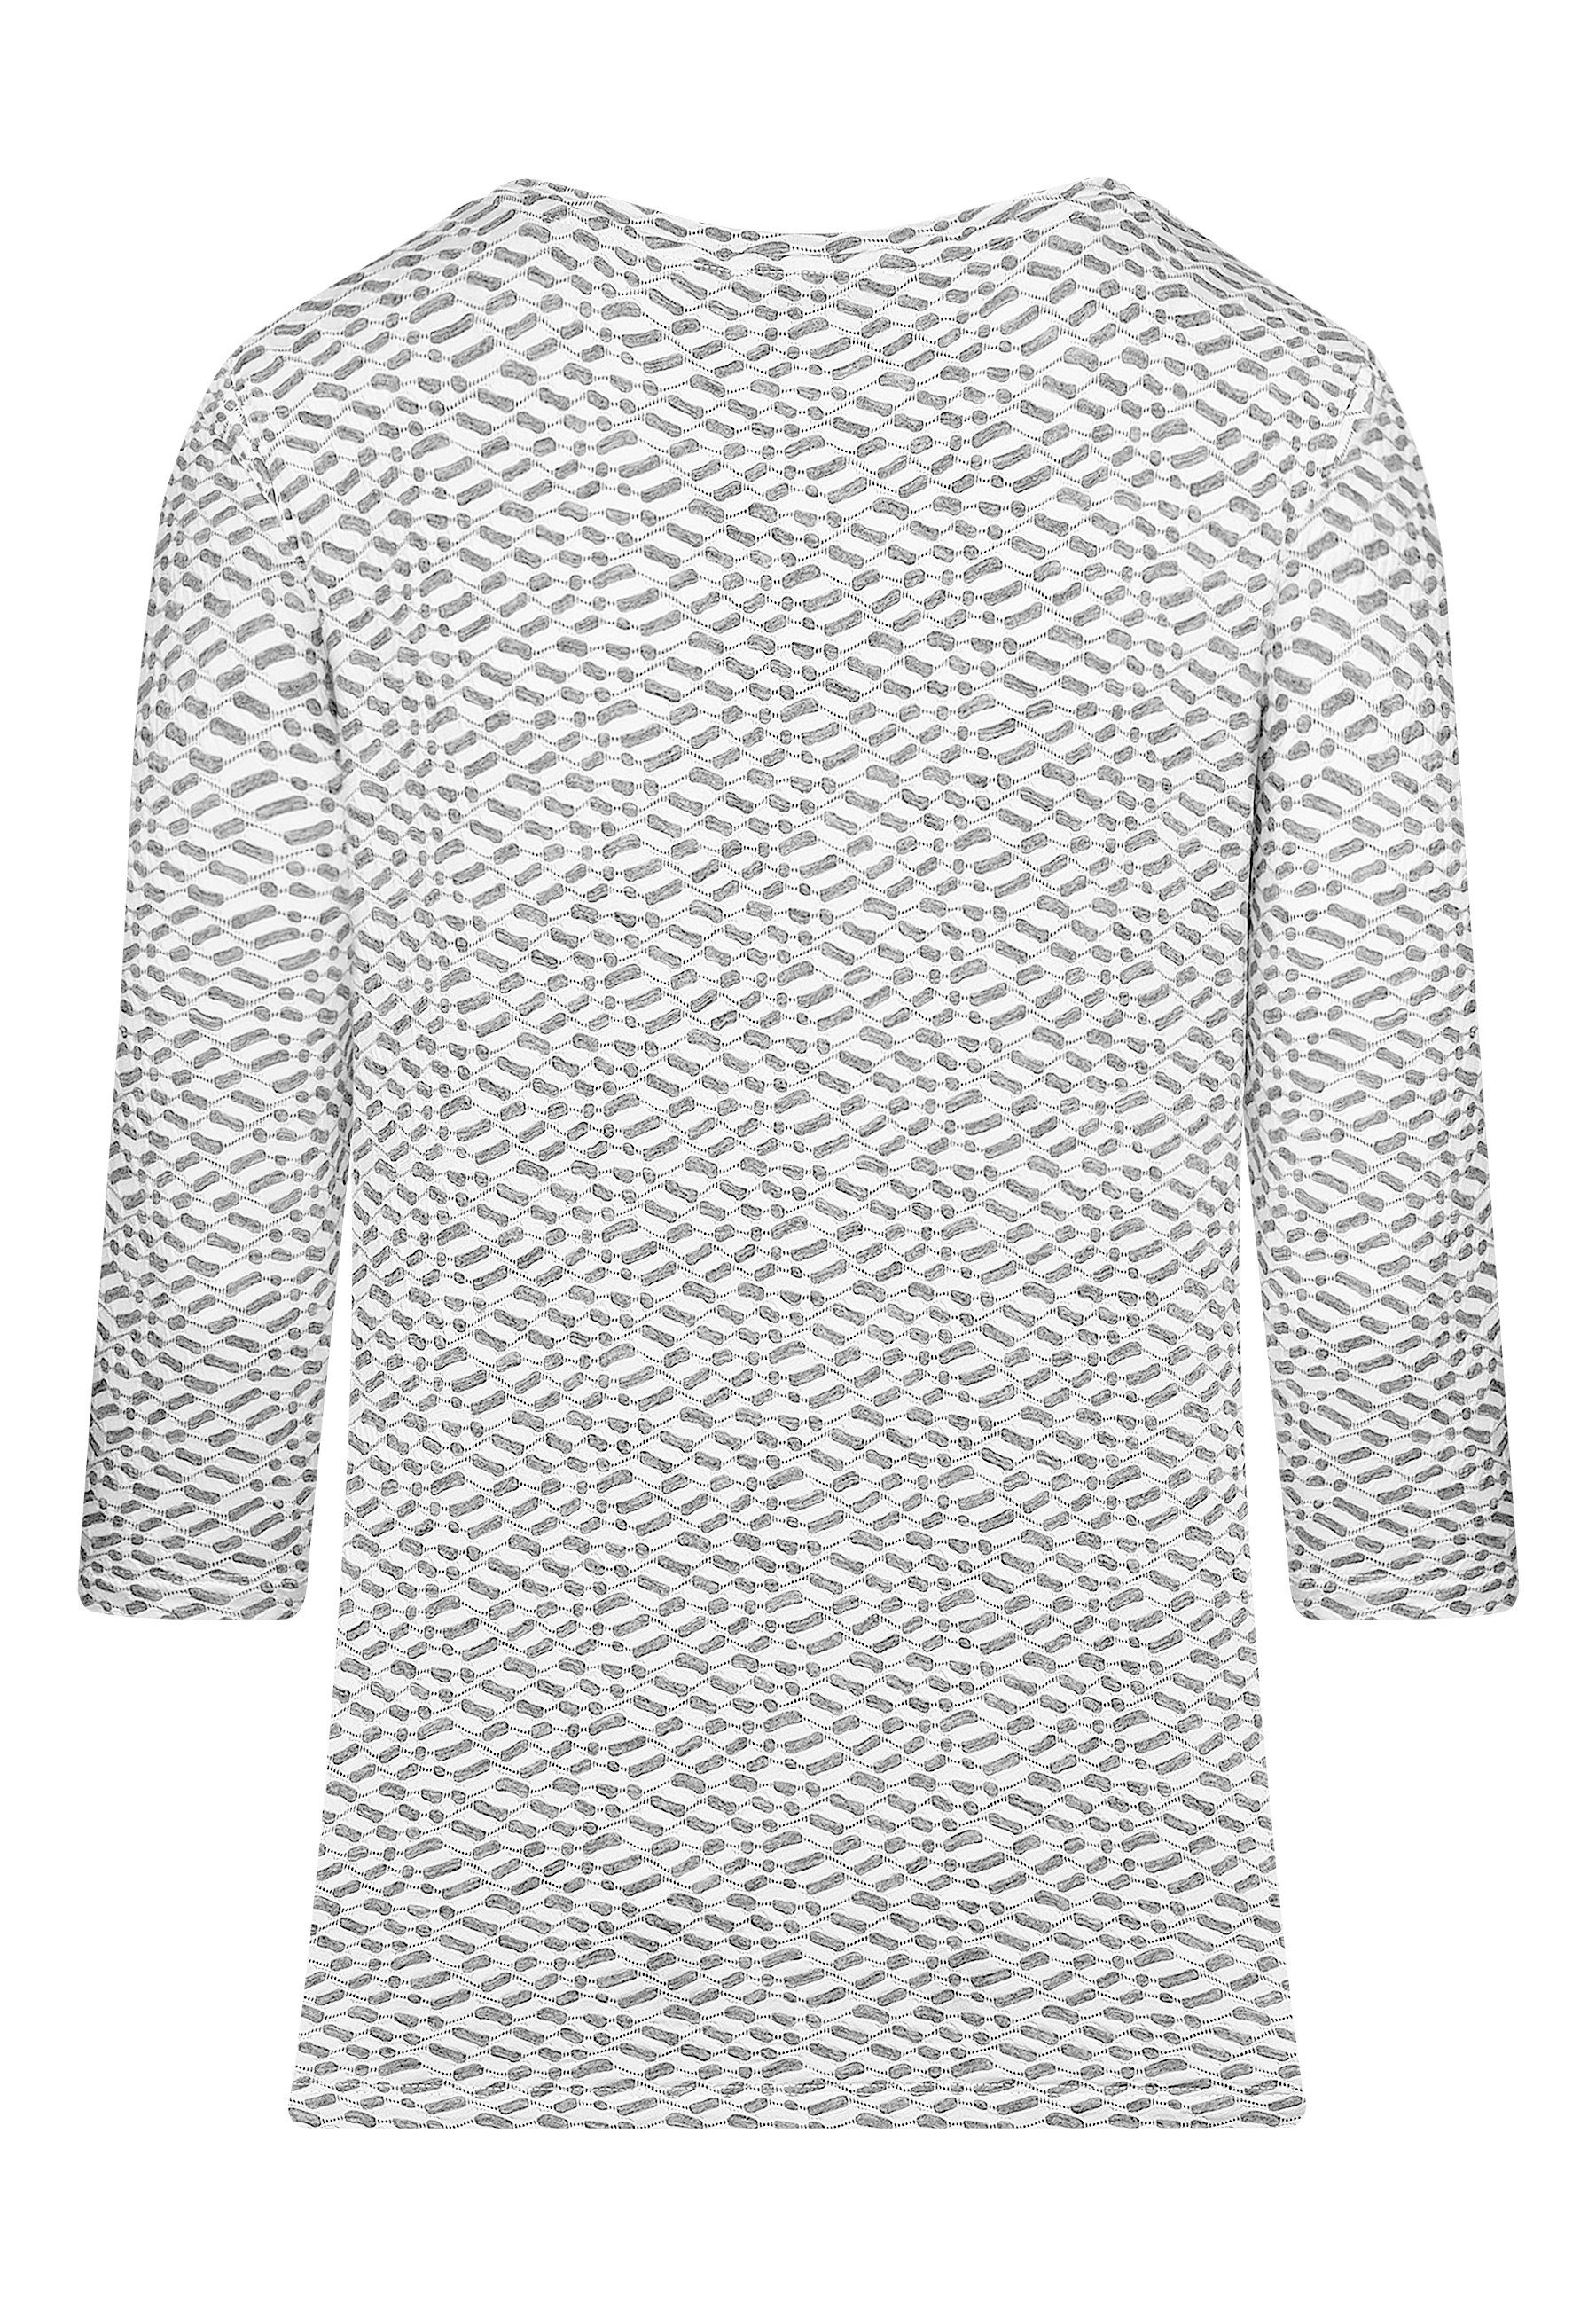 (1-tlg) 01/white-silver Jacquard - Shirt T-Shirt BICALLA